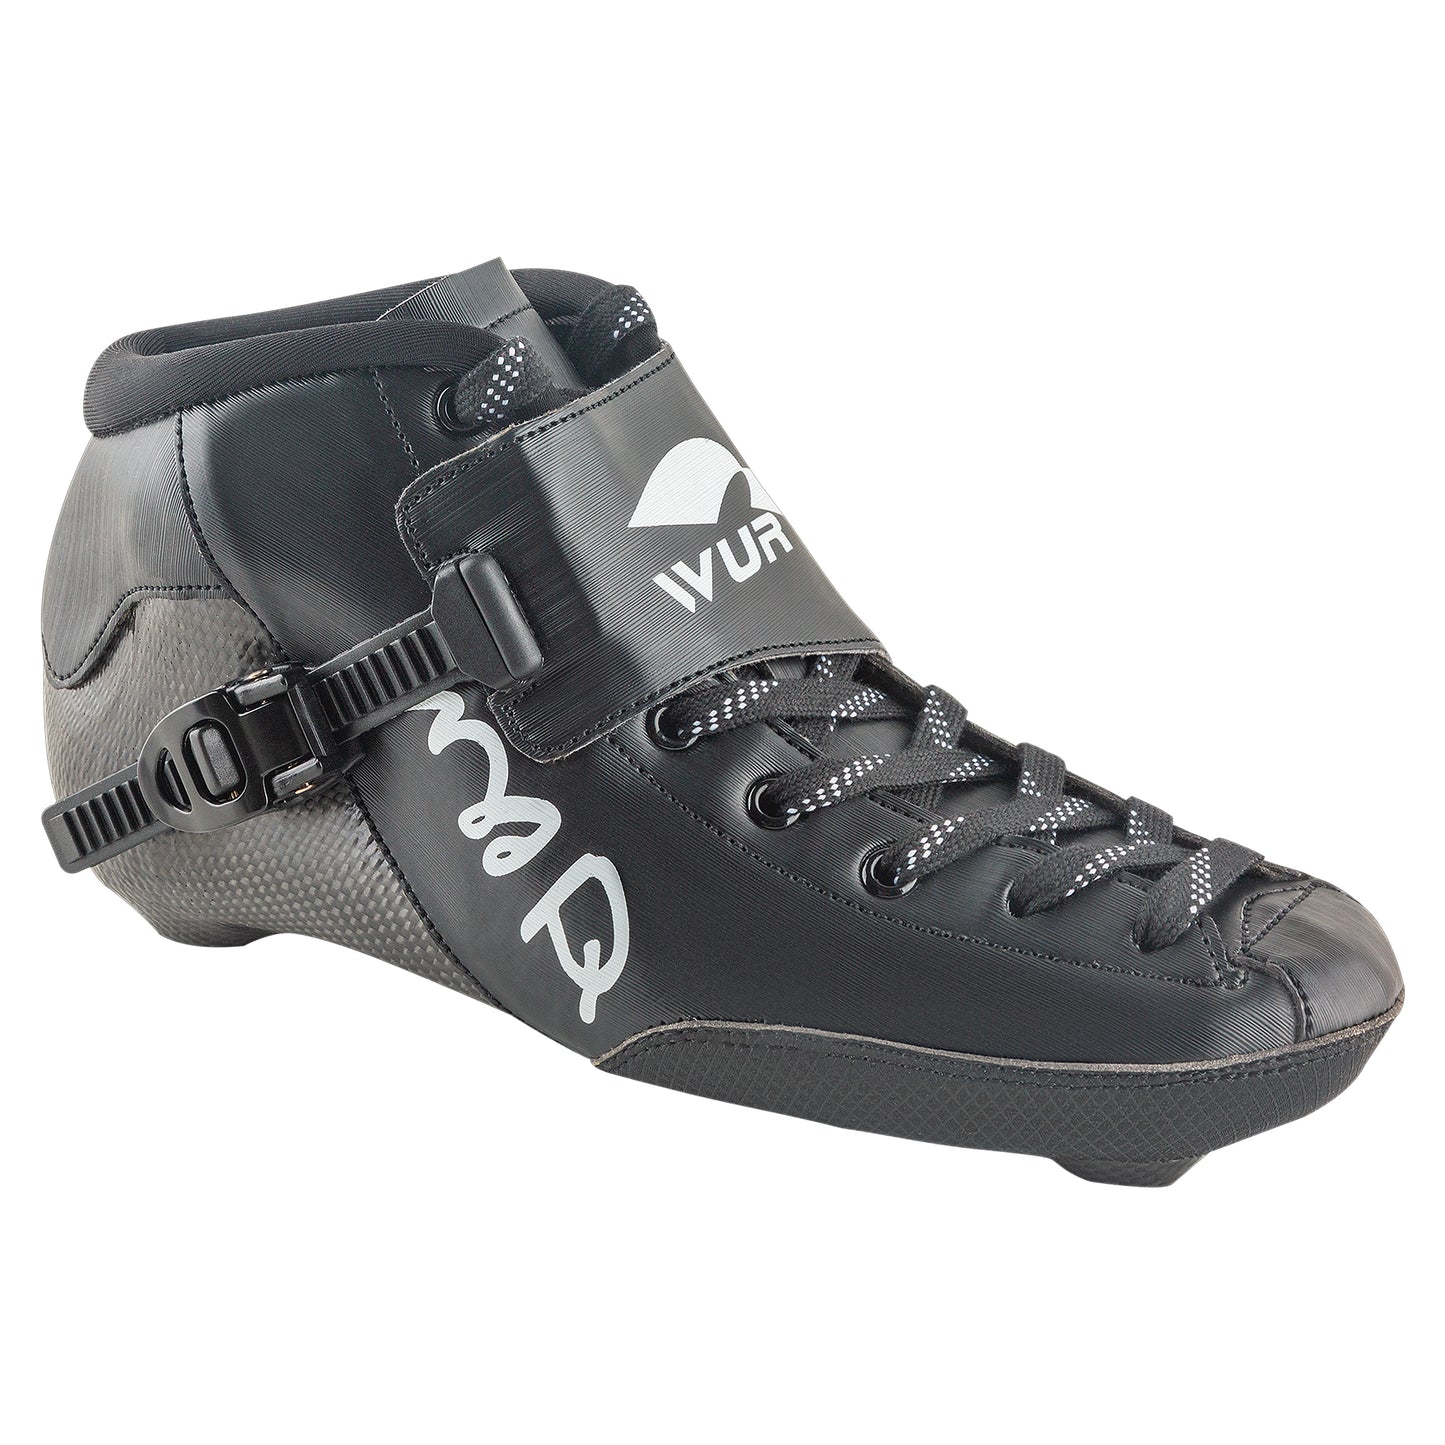 CX speed skate boots black